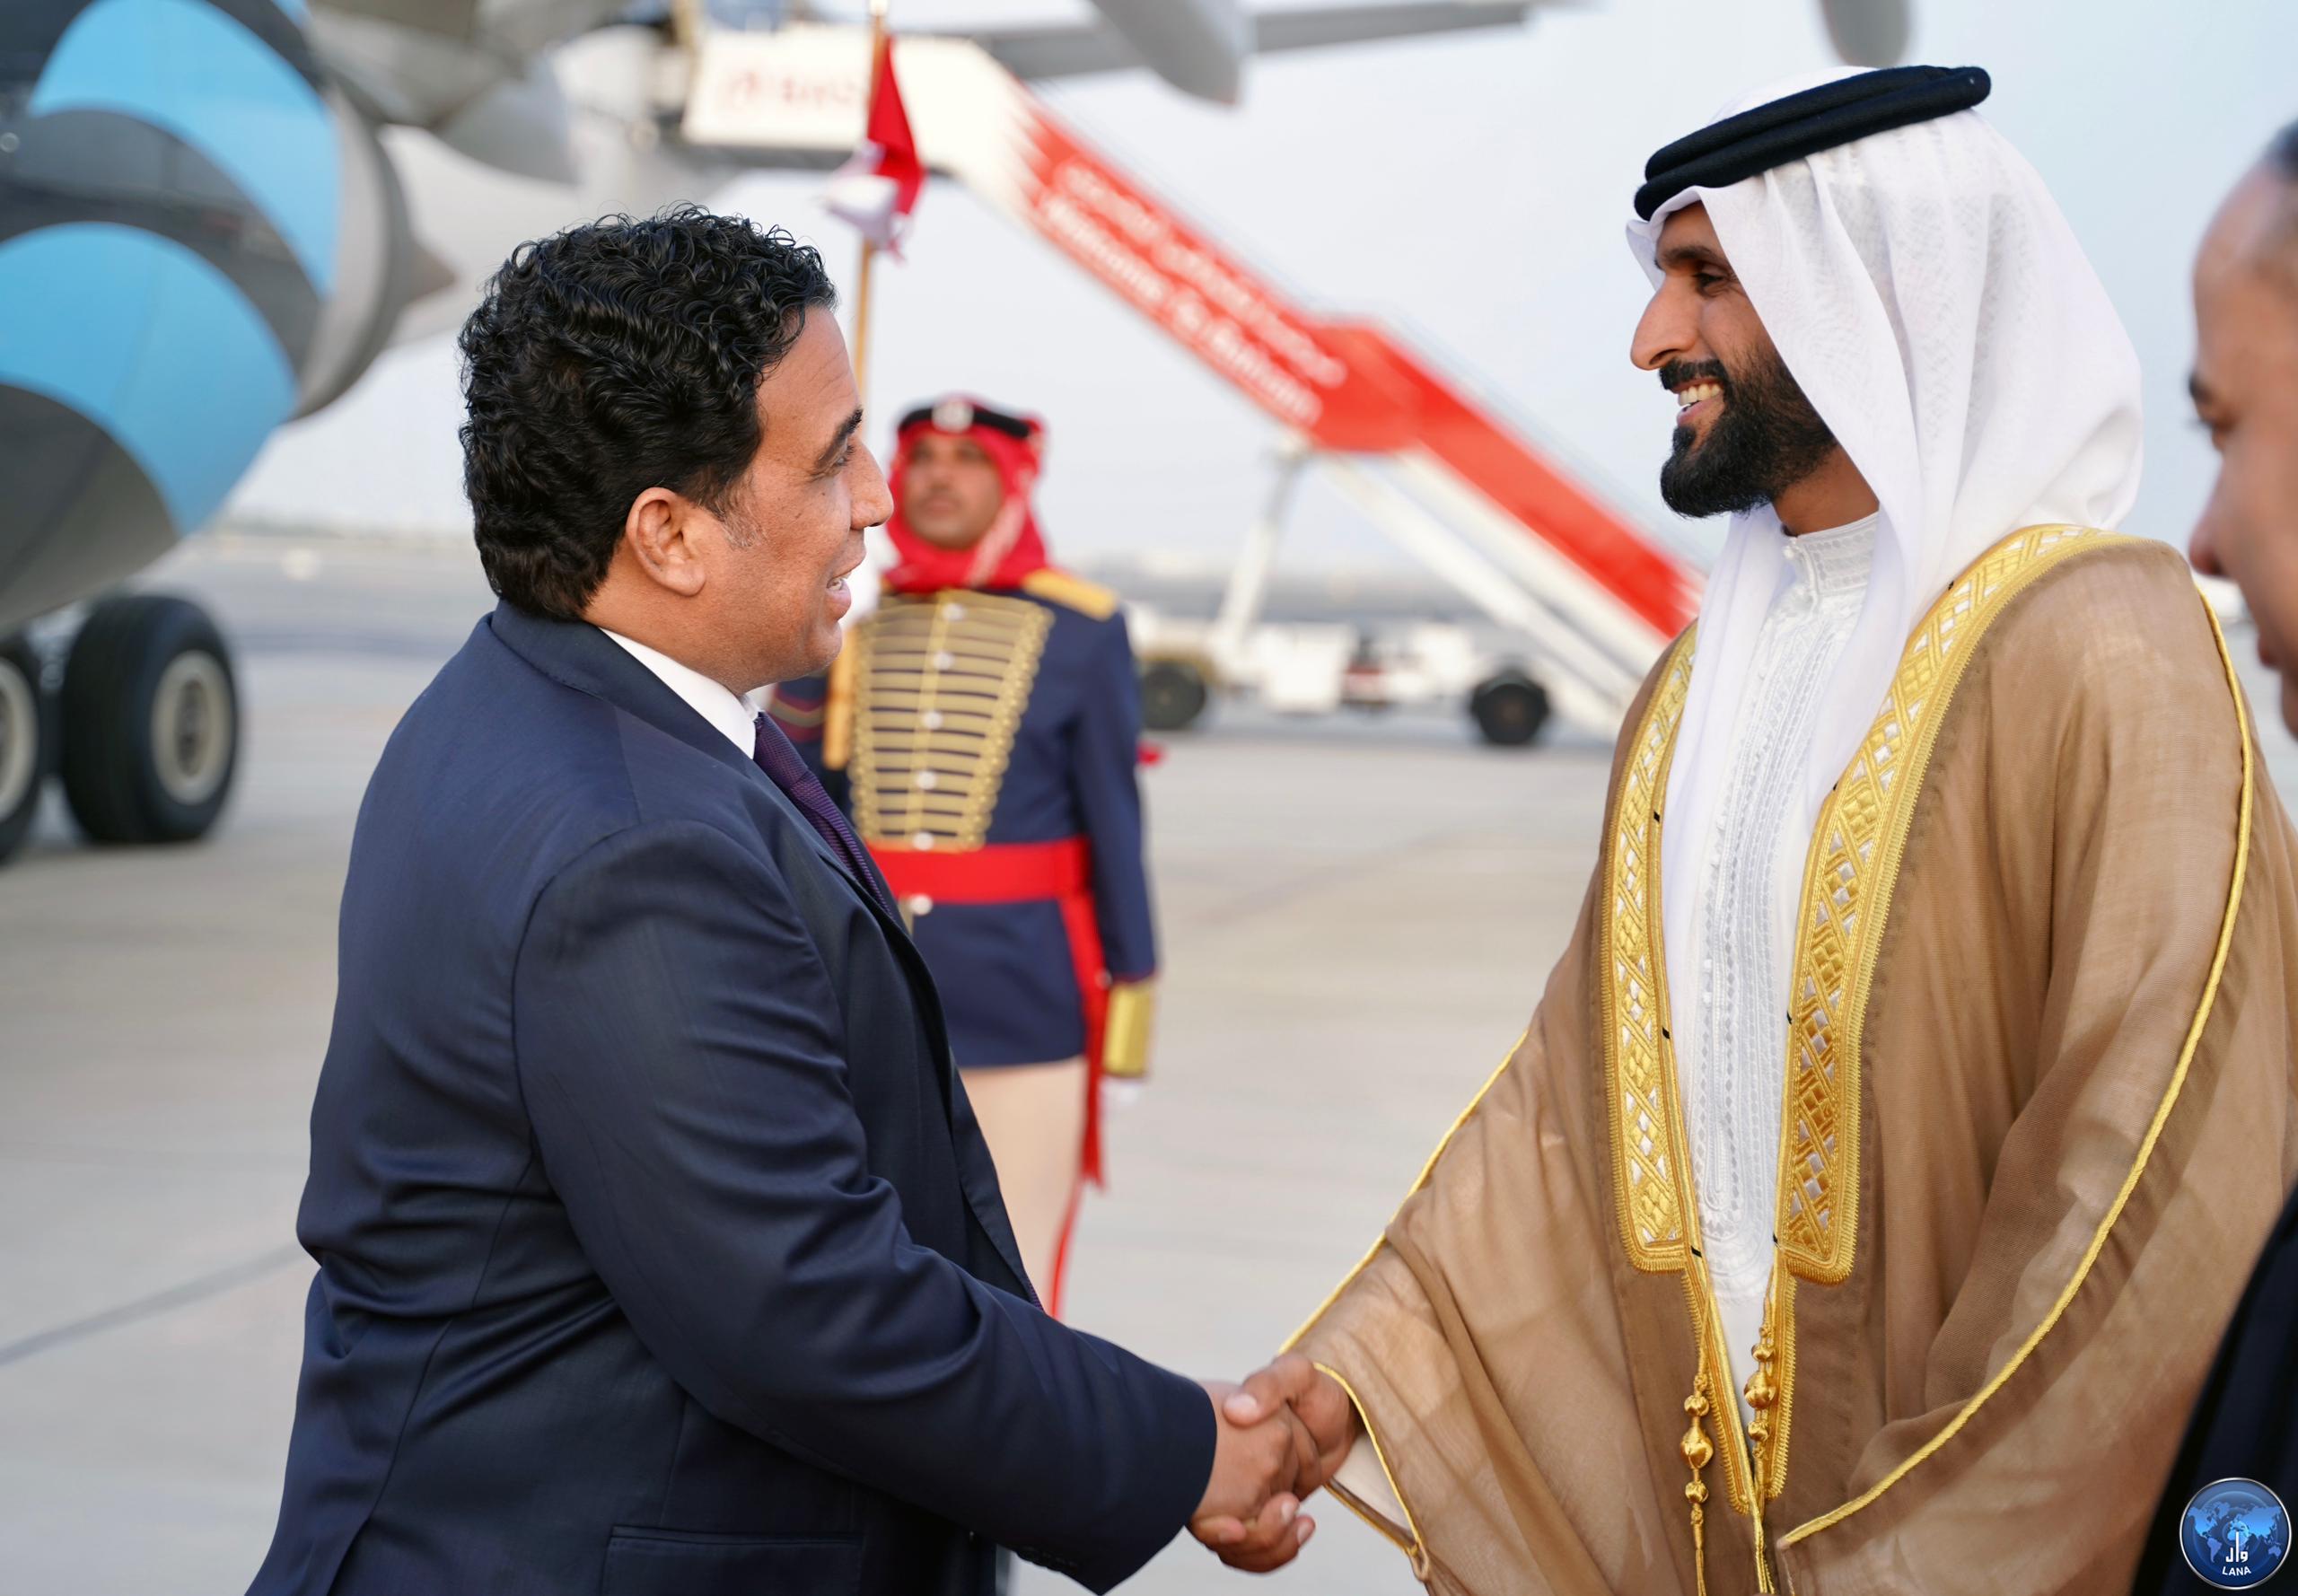 Al-Manfi arrives in Manama to participate in the 33rd Arab Summit.